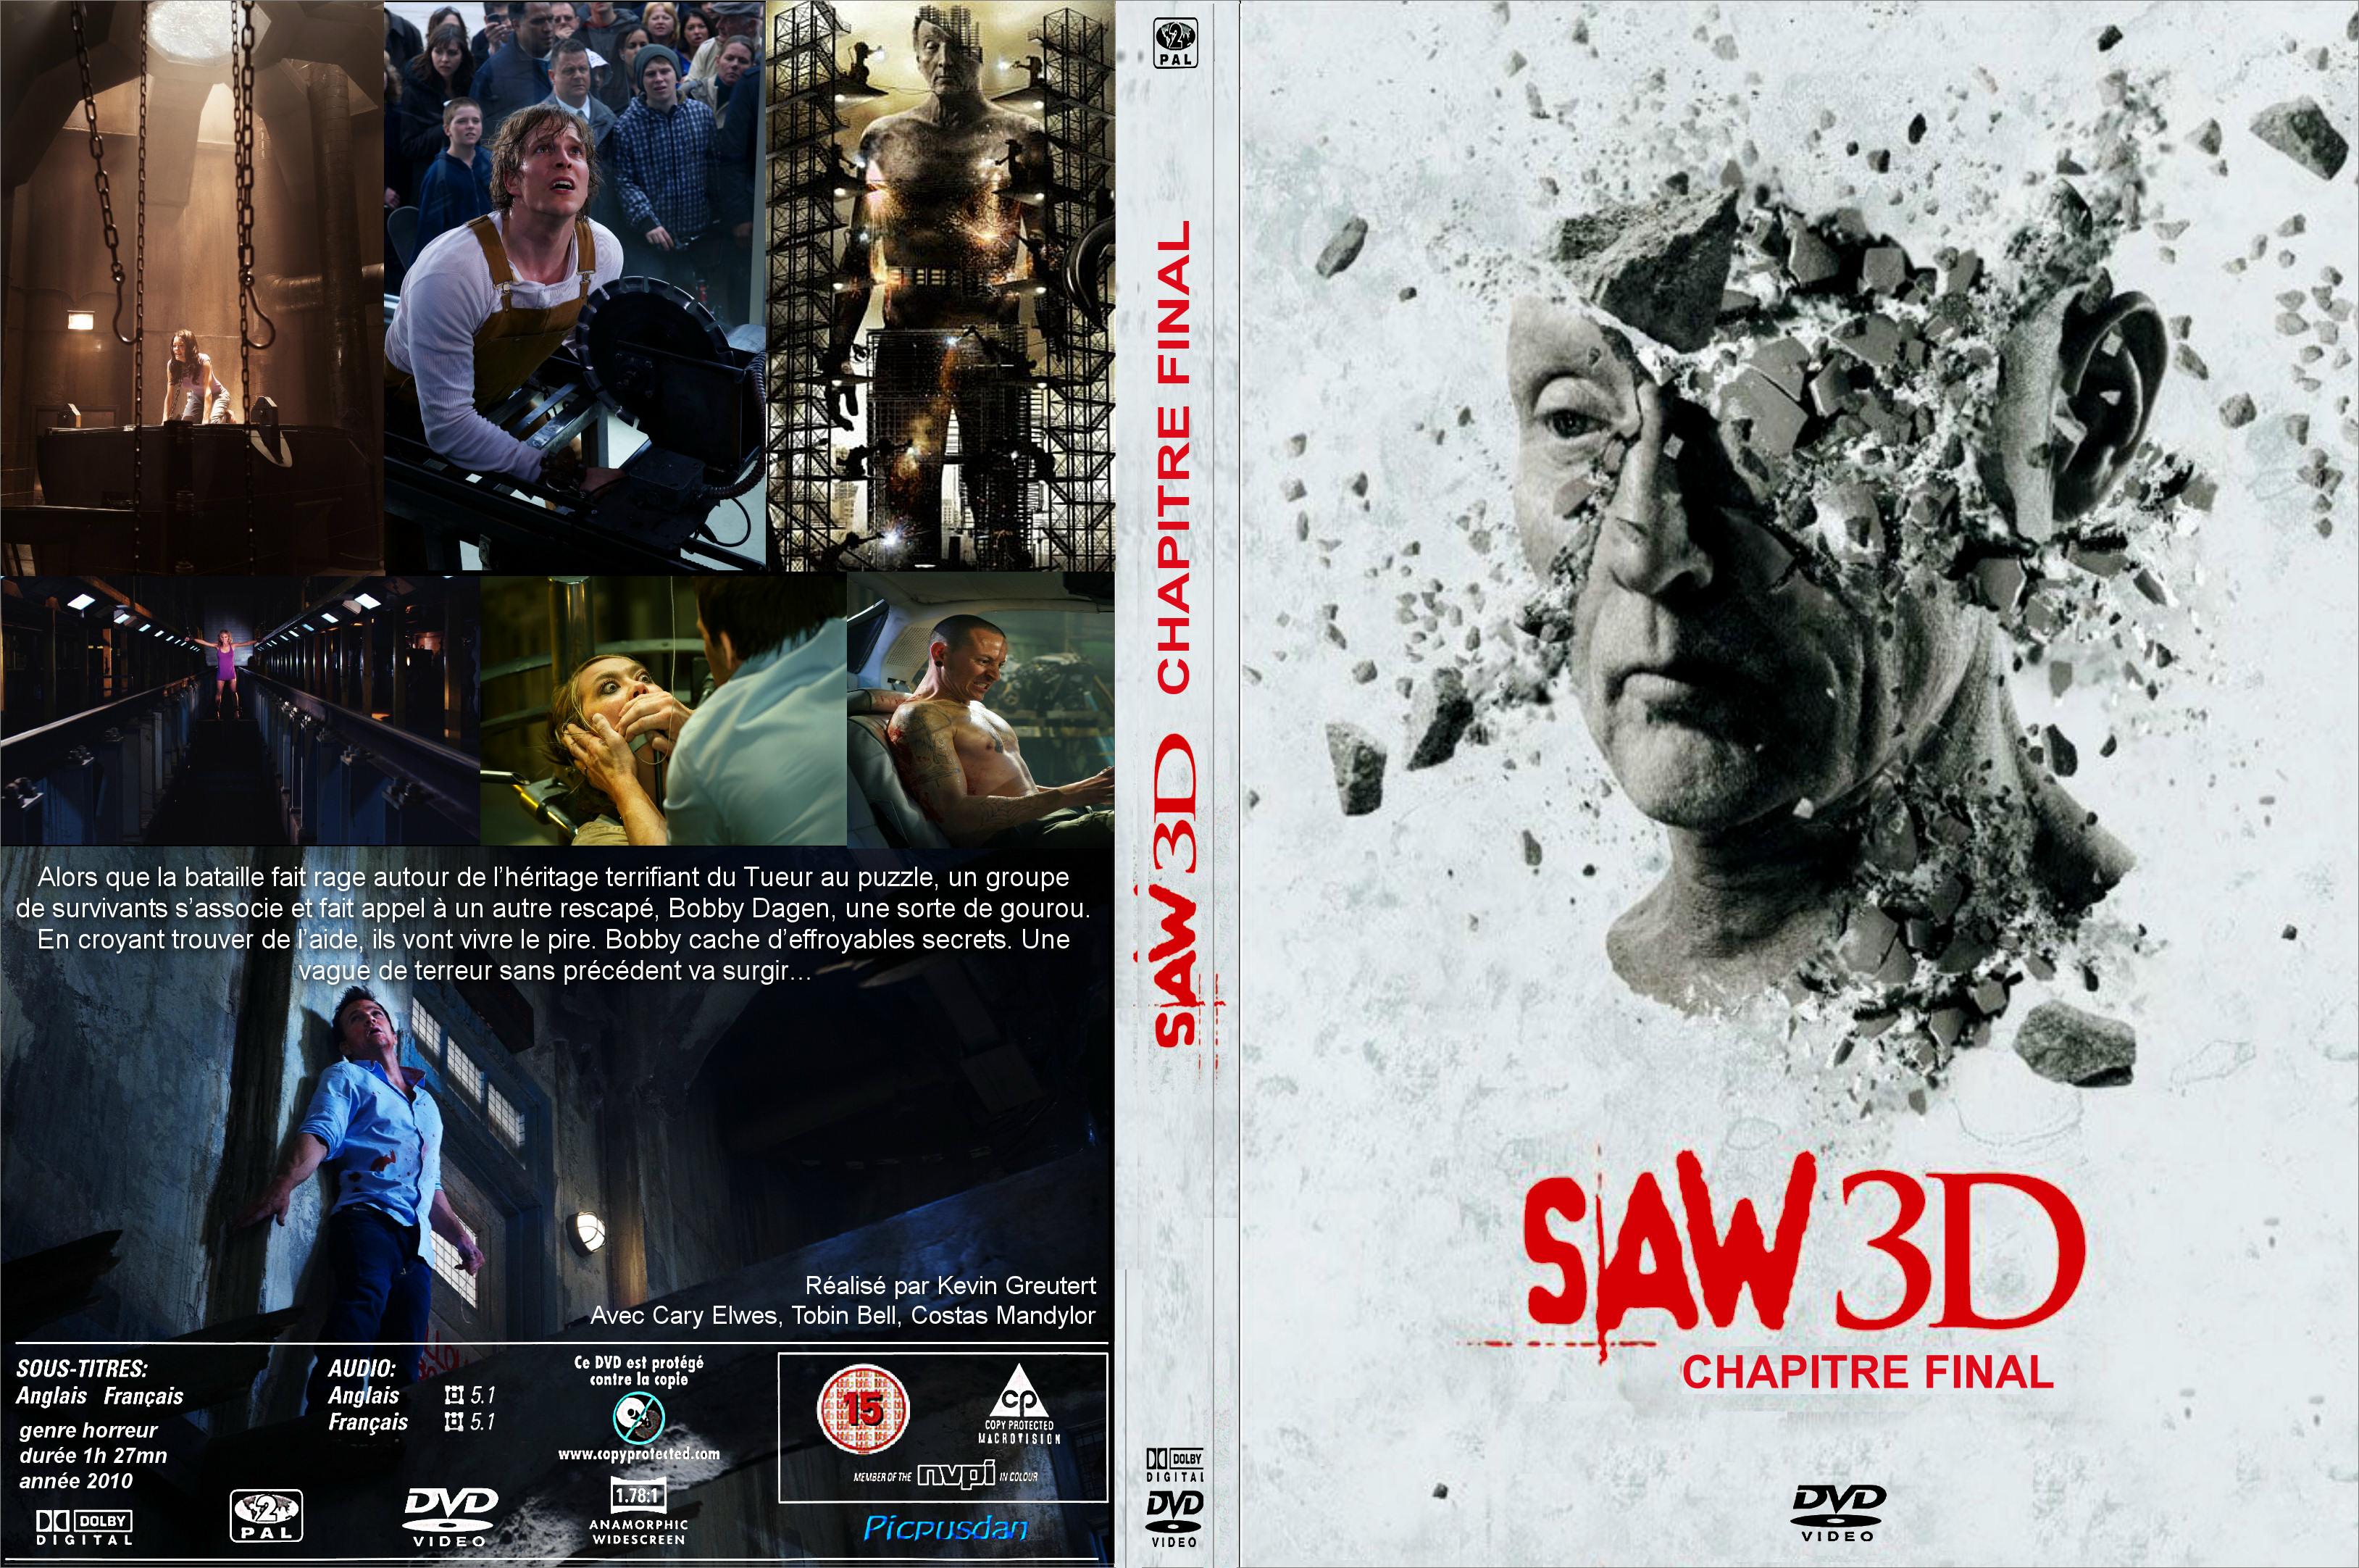 Jaquette DVD Saw 3d custom - SLIM